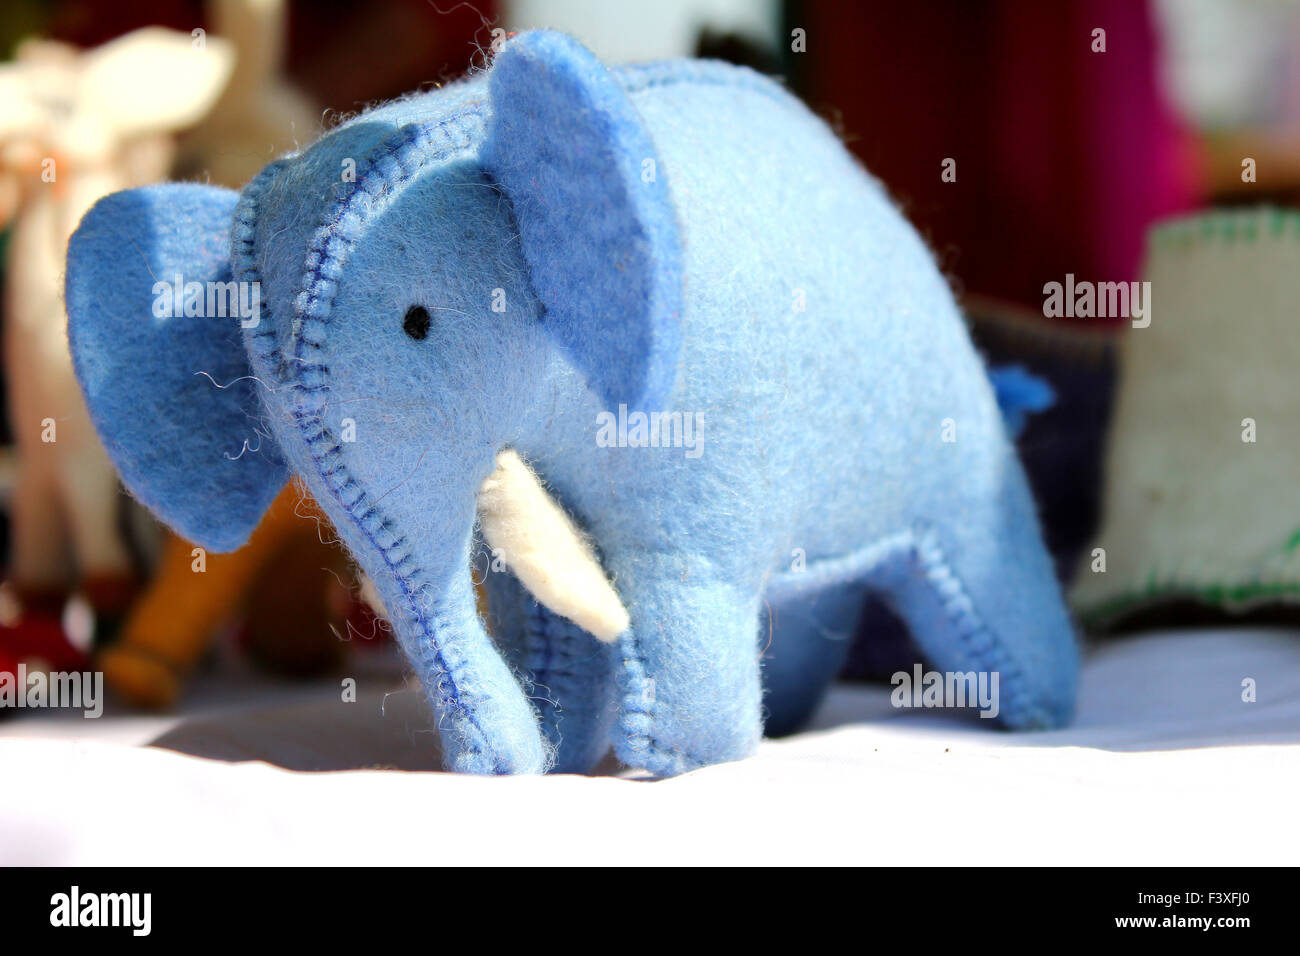 elephant toy in surajkund fair Stock Photo